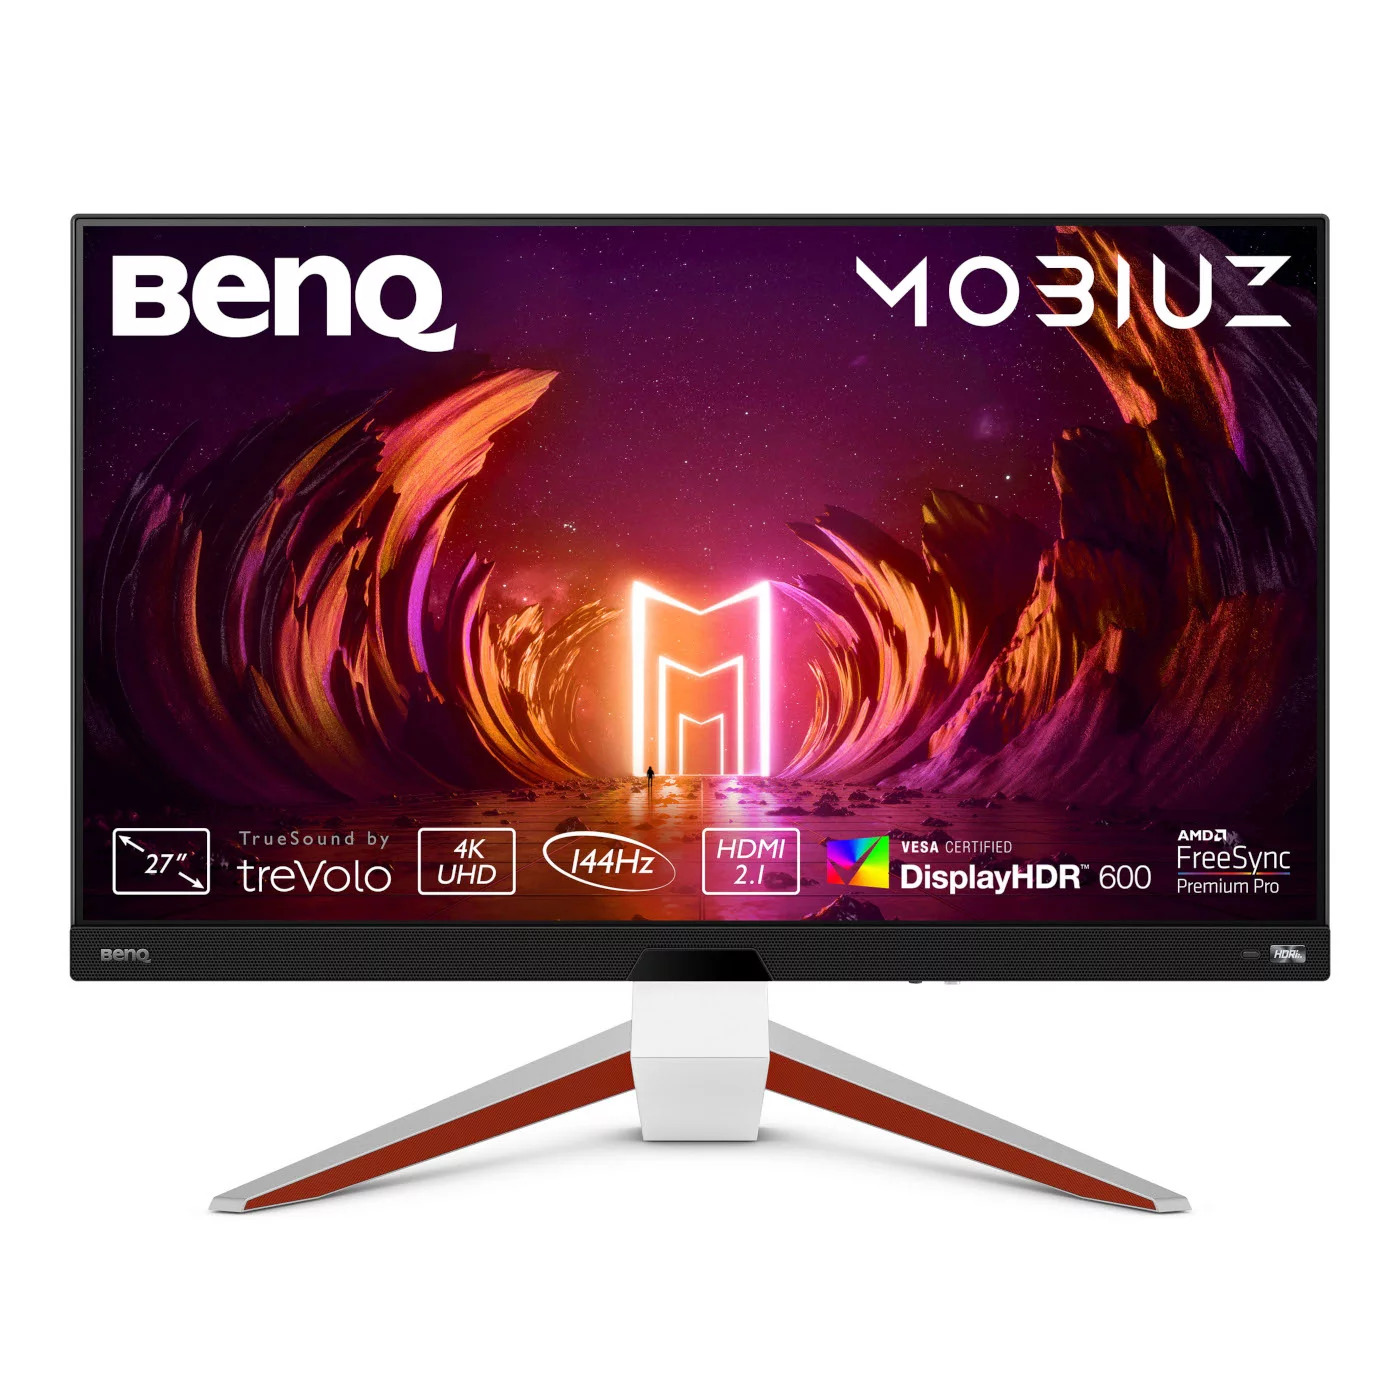 Benq - Monitor BenQ MOBIUZ 27" EX2710U IPS 4K 144Hz / 120Hz (PS5/Xbox X) 1ms FreeSync Premium Pro